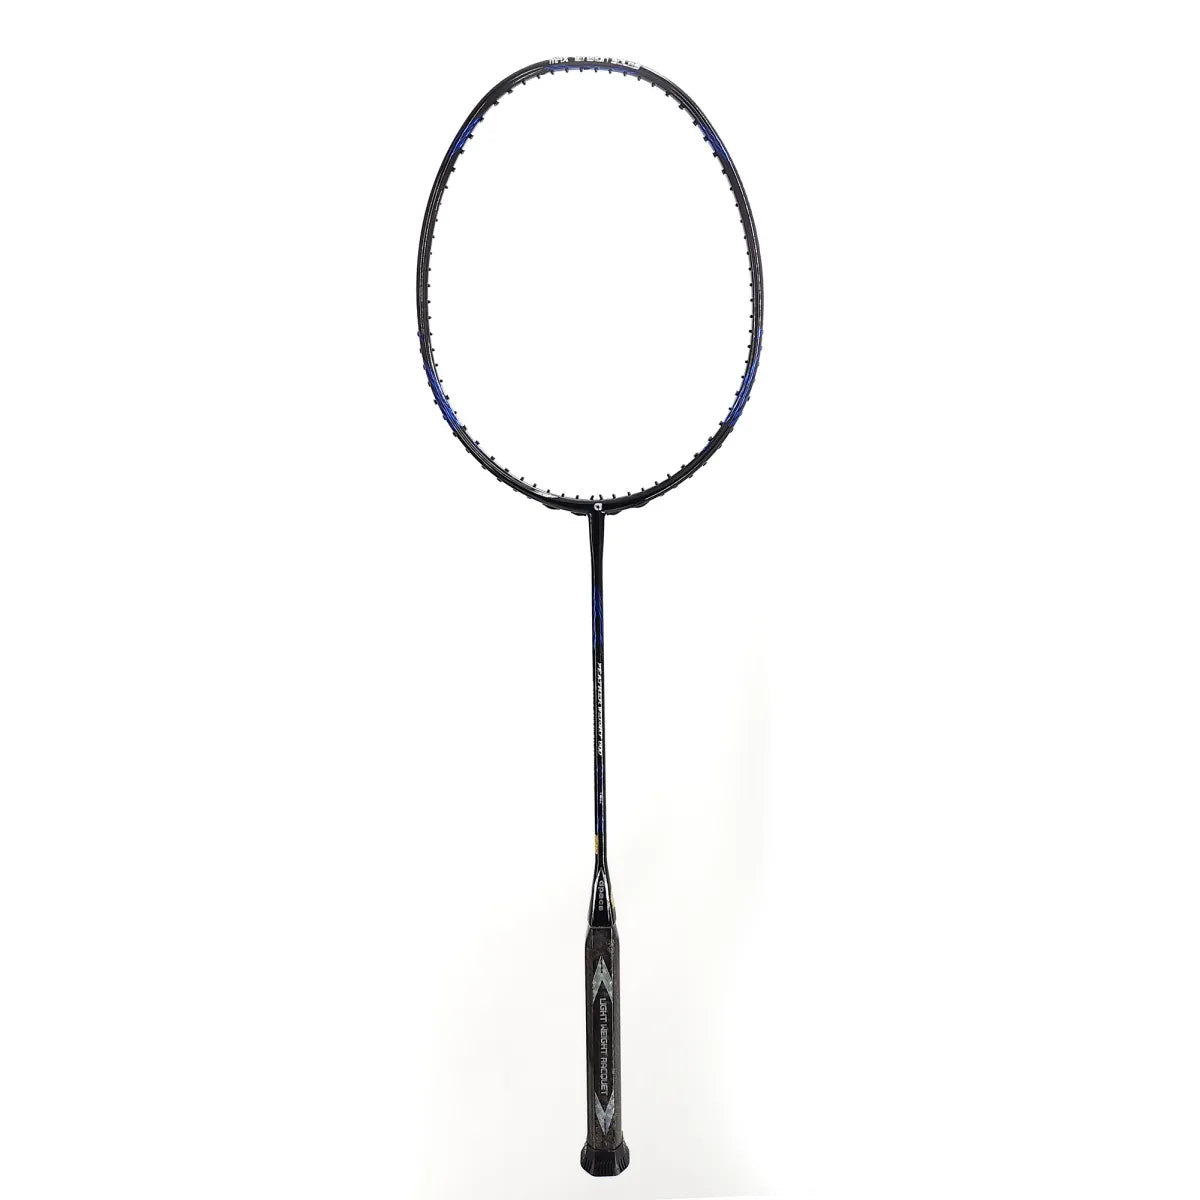 Apacs Feather Weight 500 Badminton Racquet - Unstrung